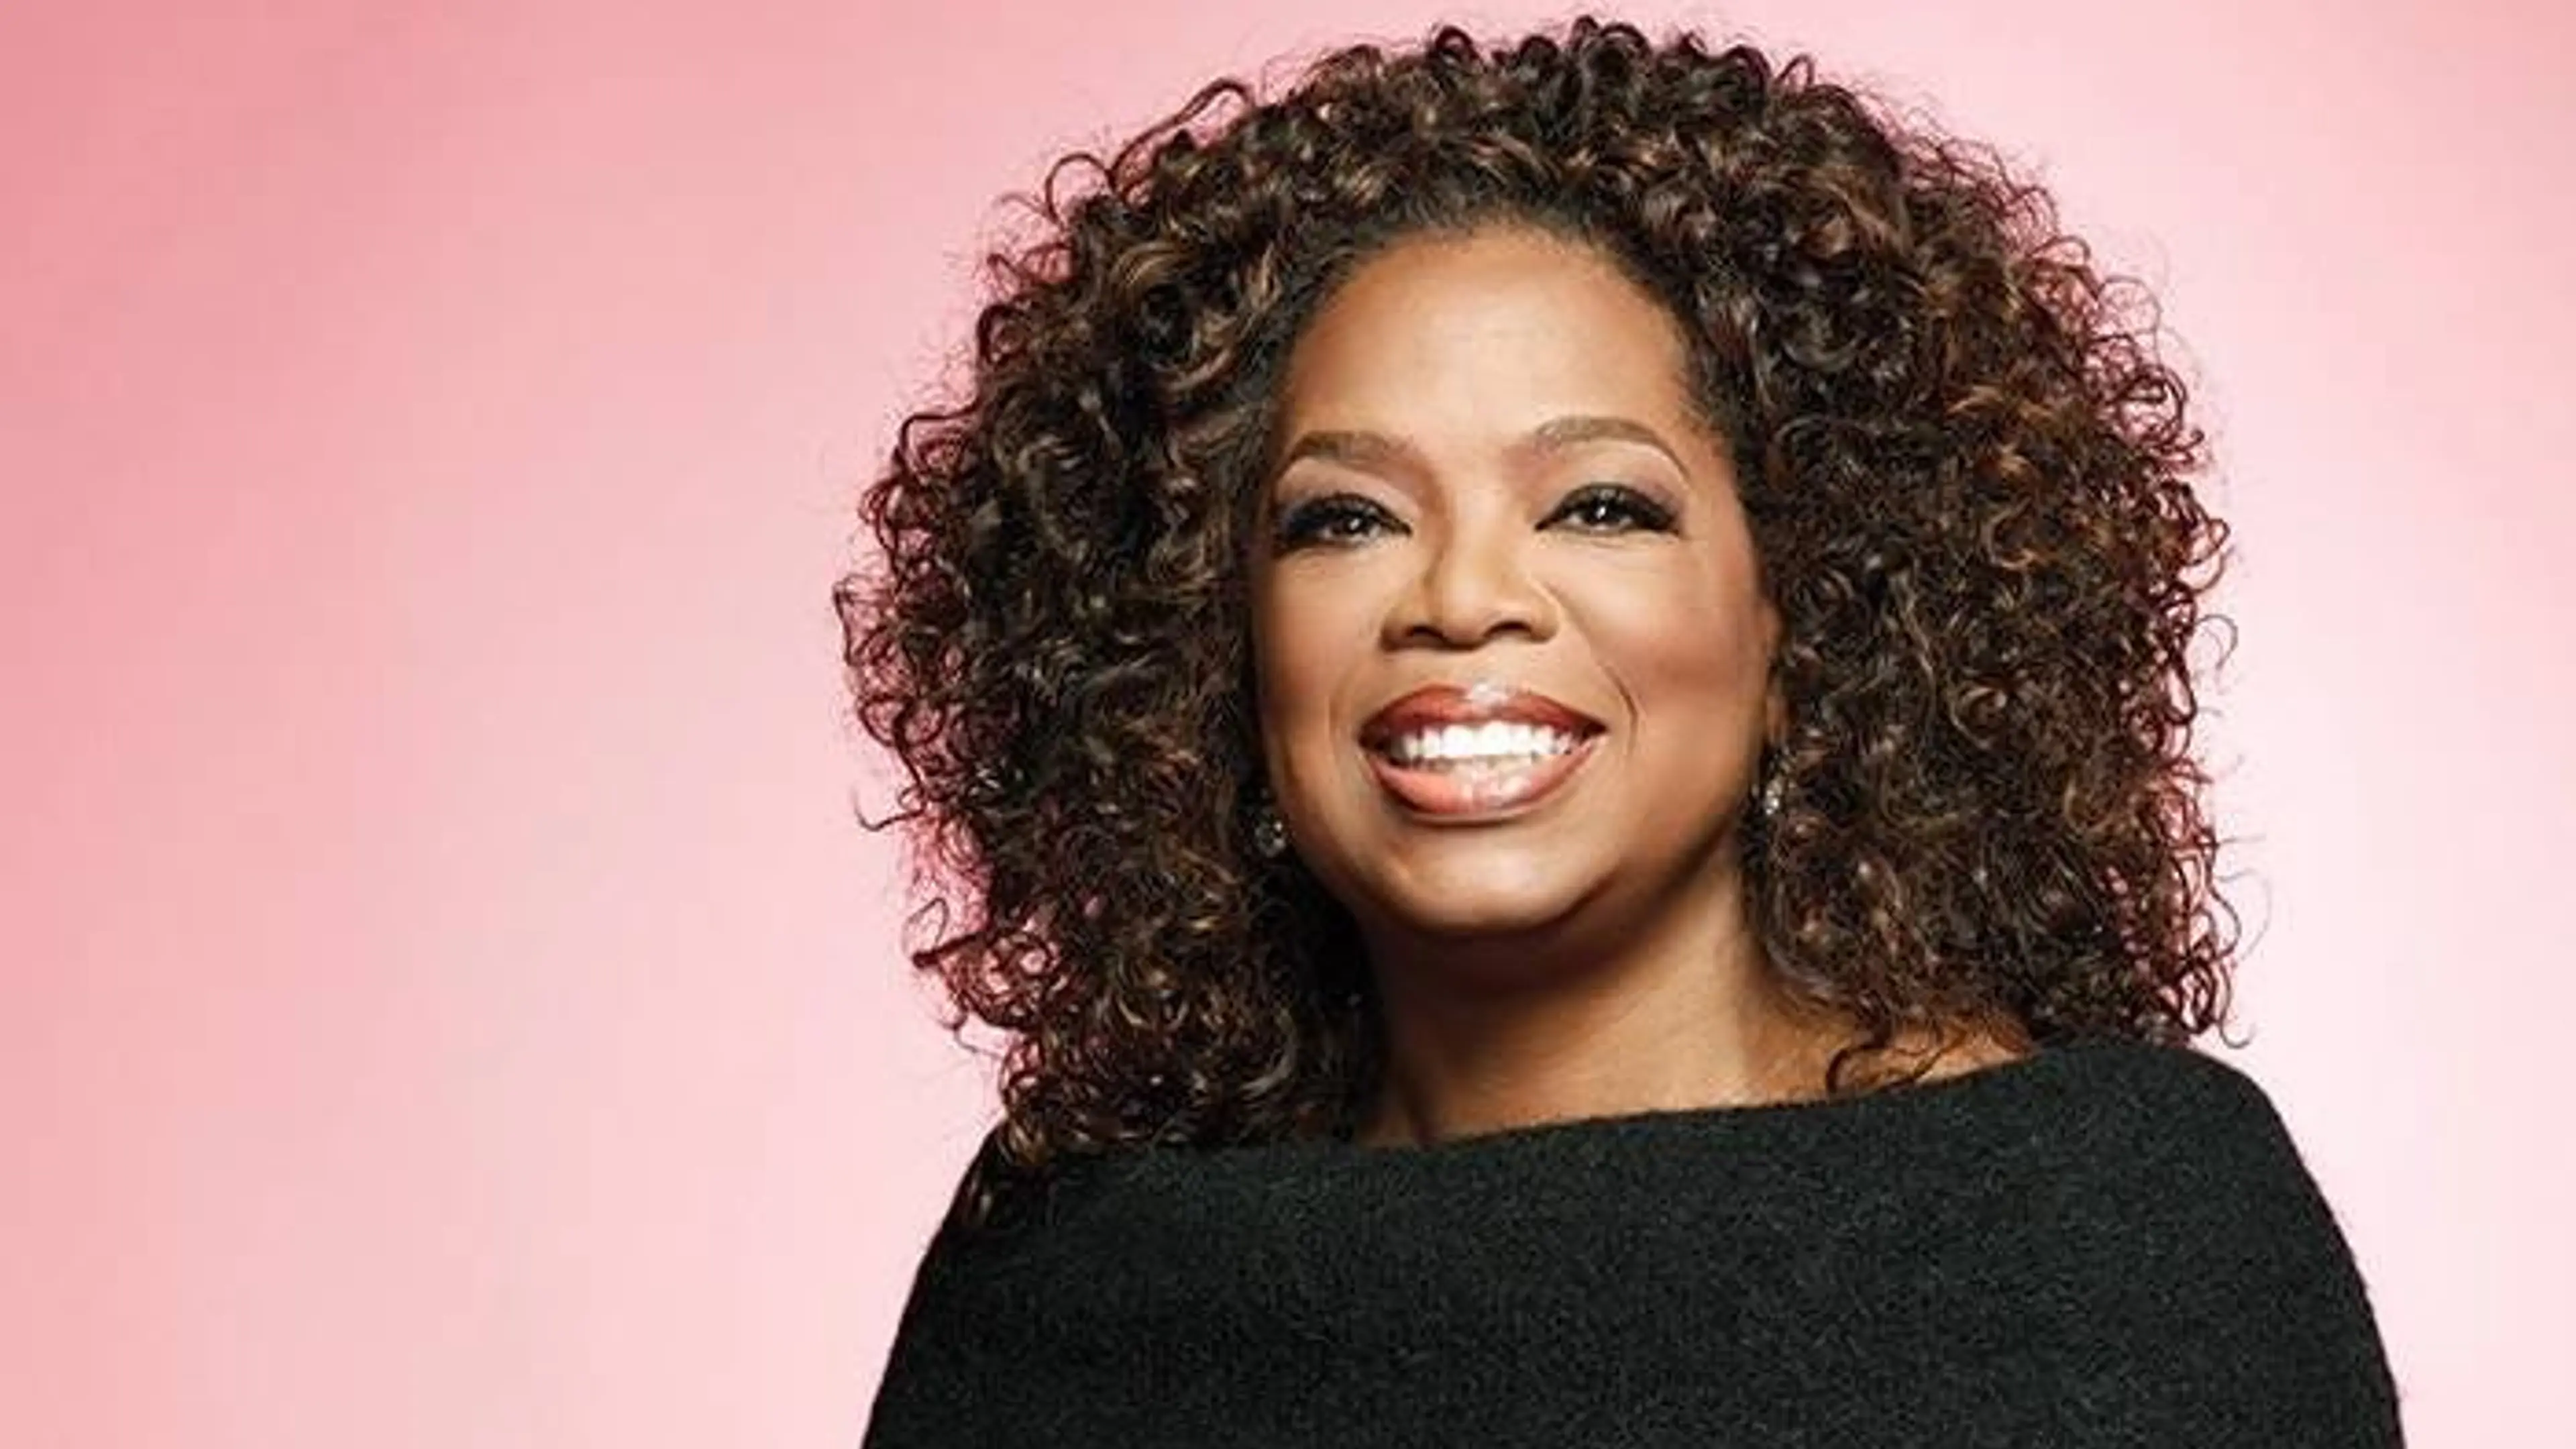 Oprah Winfrey: 6 life lessons with entrepreneurial wisdom
